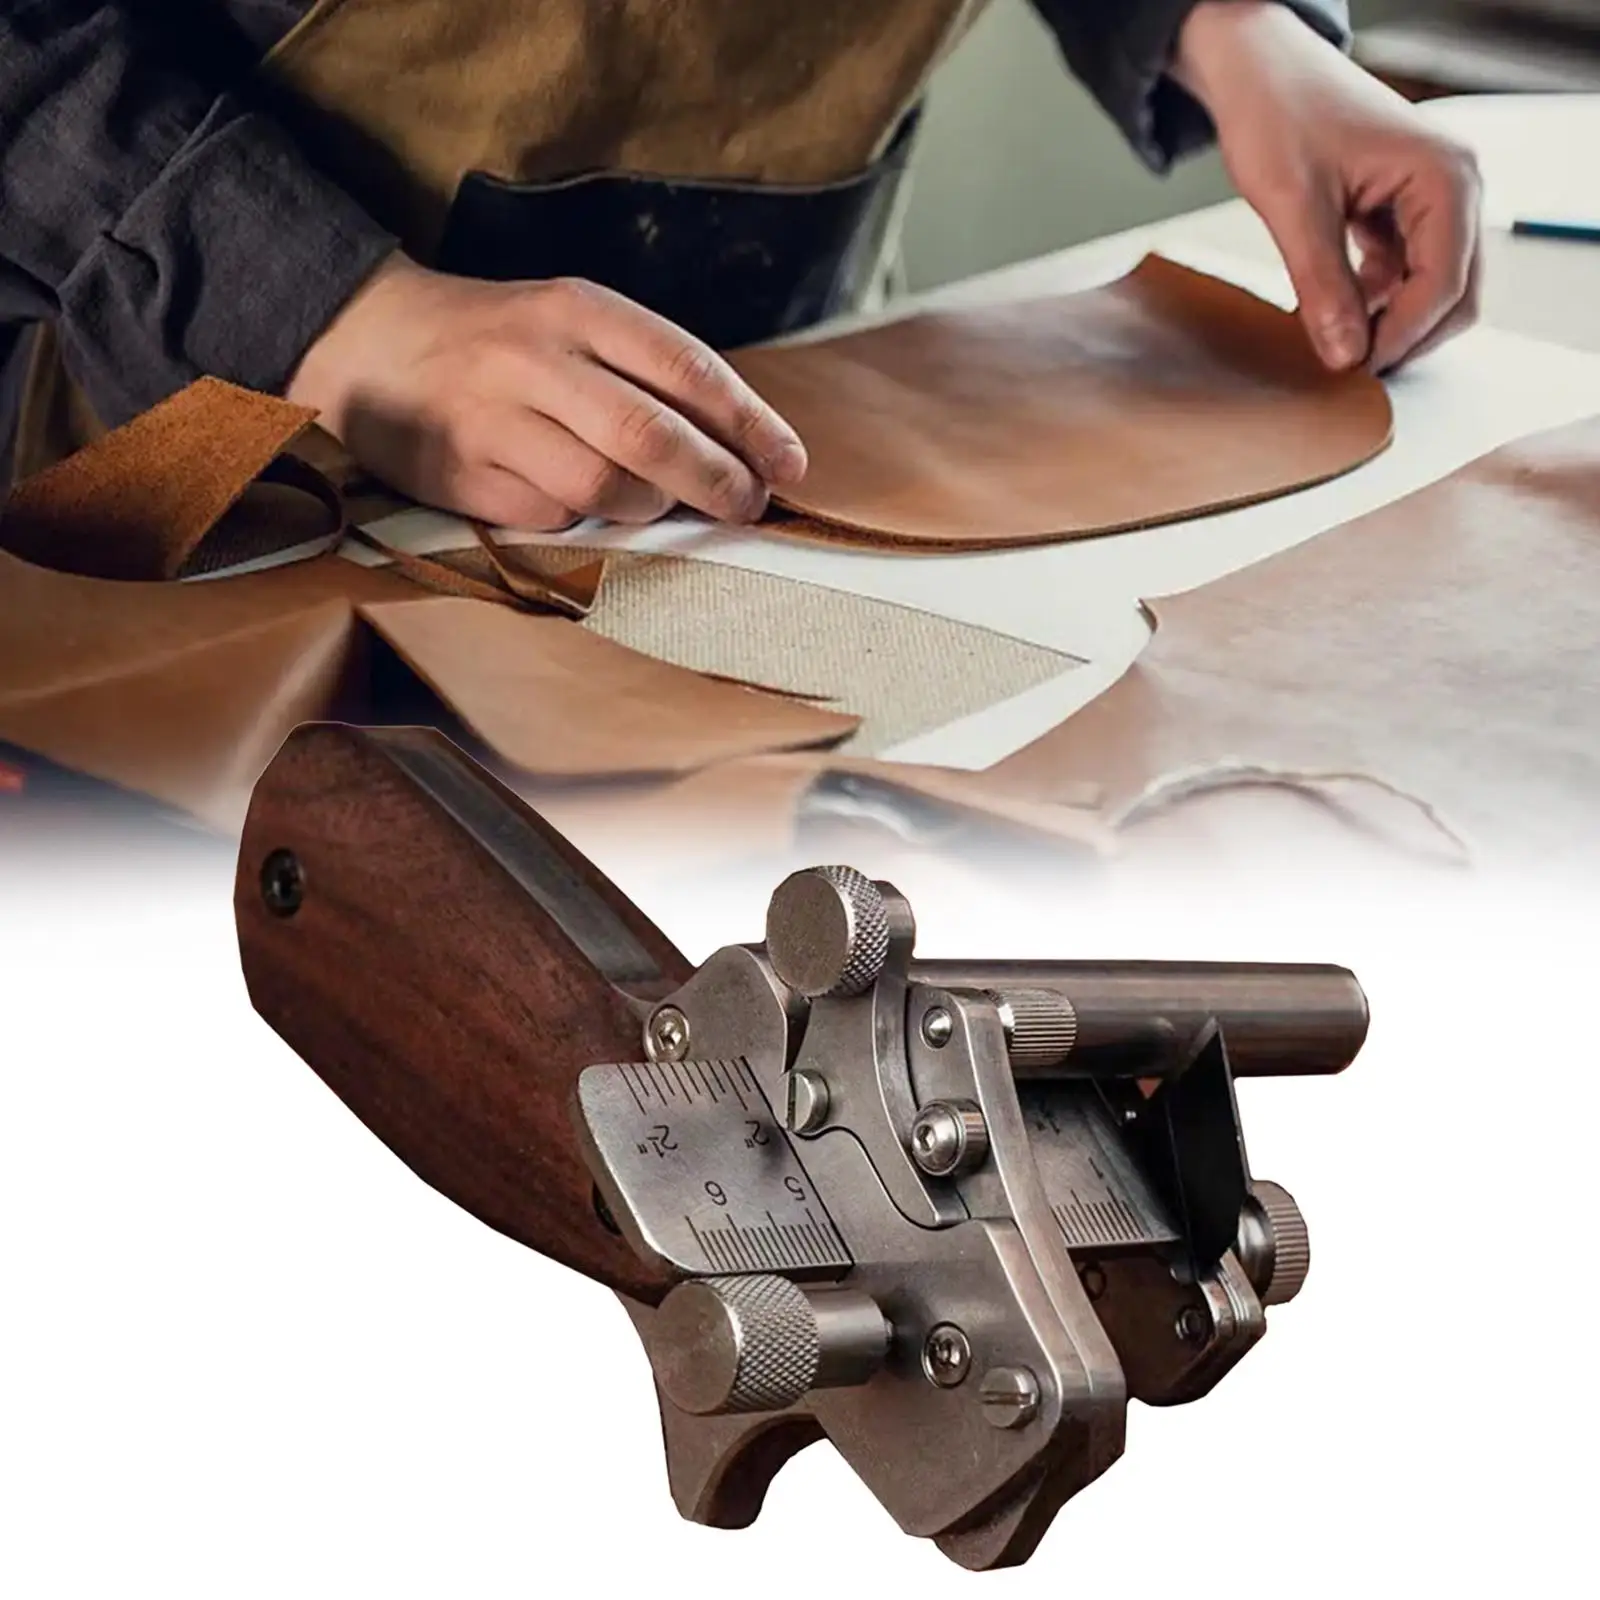 Leather Craft Tool Strap Cutter Supplies Practical Clear Scale Quick Cut Project Belt Cutter Tool Lace Cutter Strip Belt Cutter